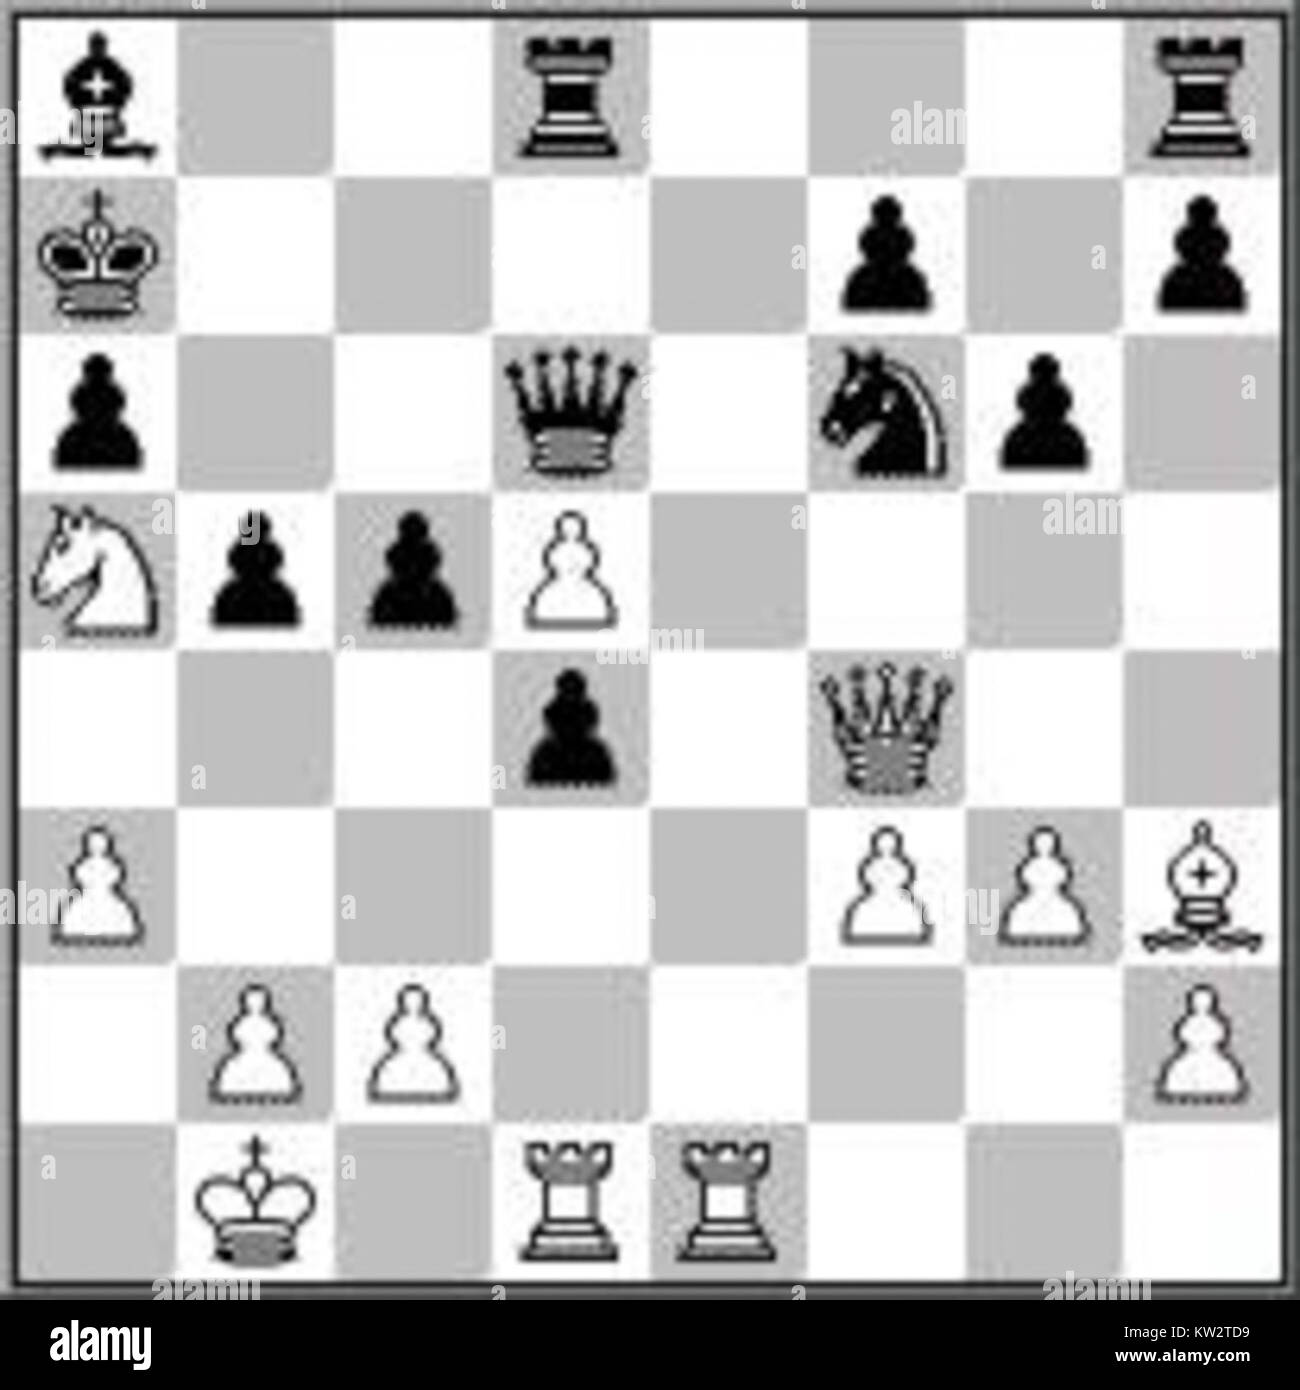 File:Chess Boxing 2007 (4).jpg - Wikimedia Commons